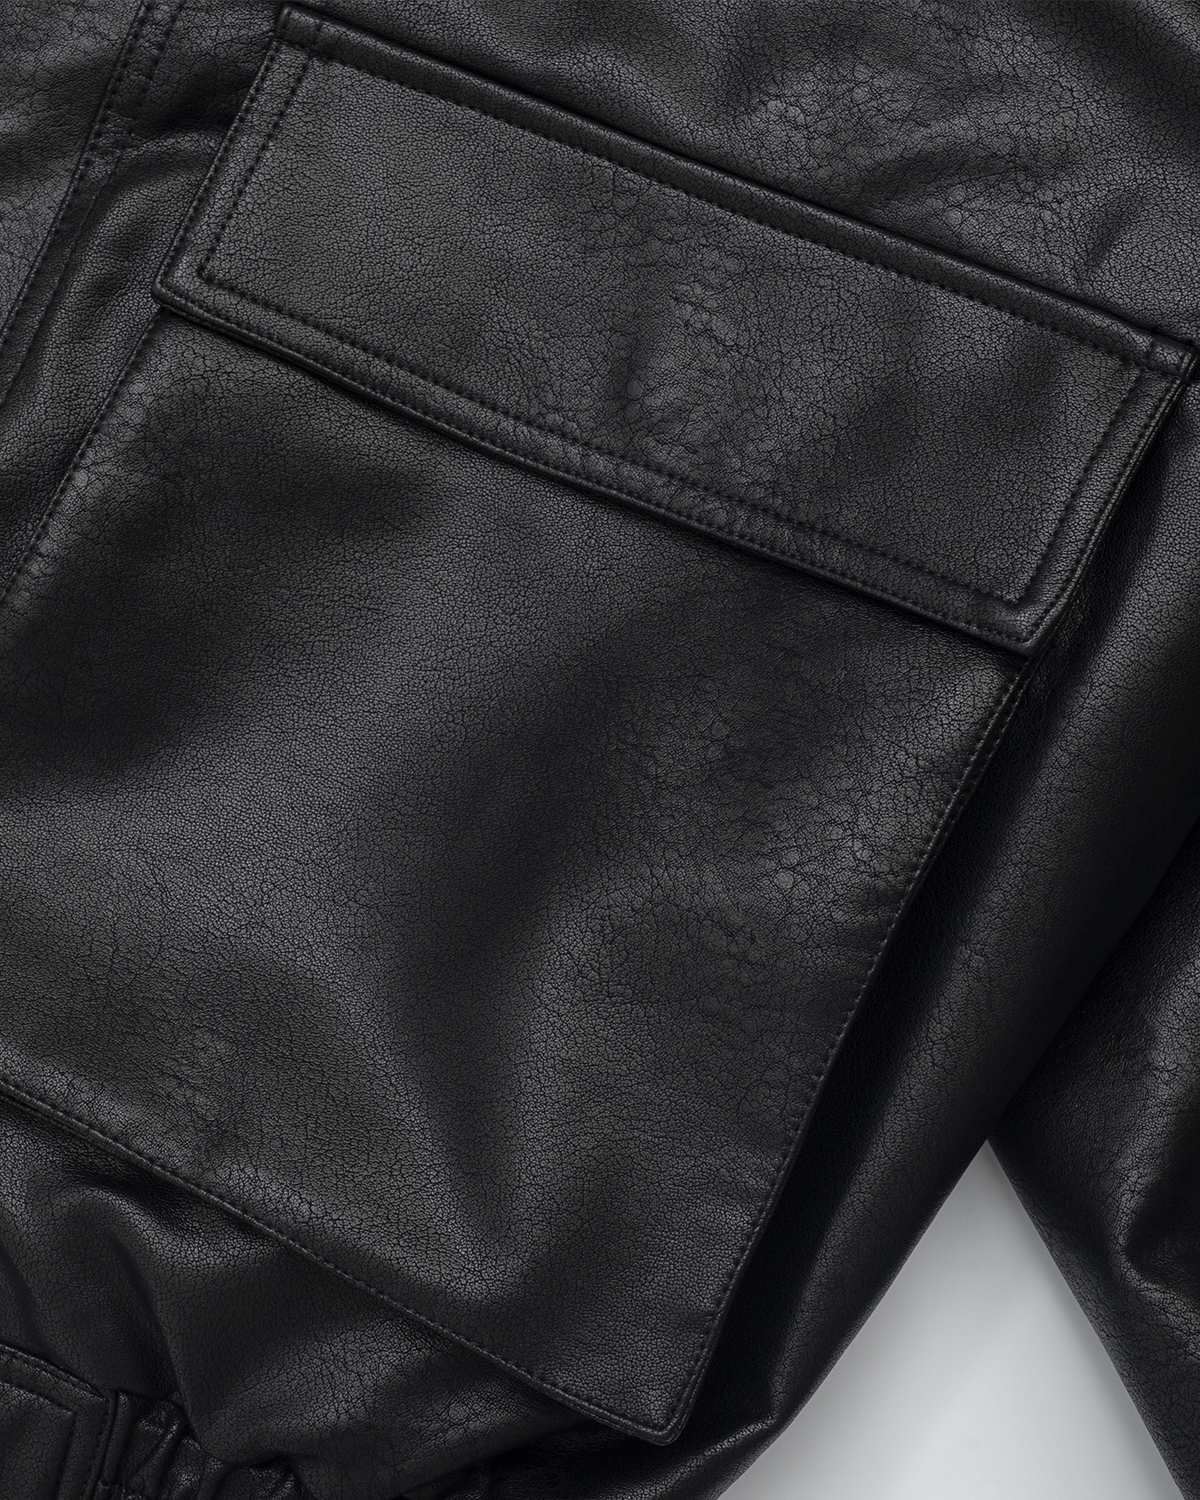 Off The Label cargo-pockets leather bomber jacket black